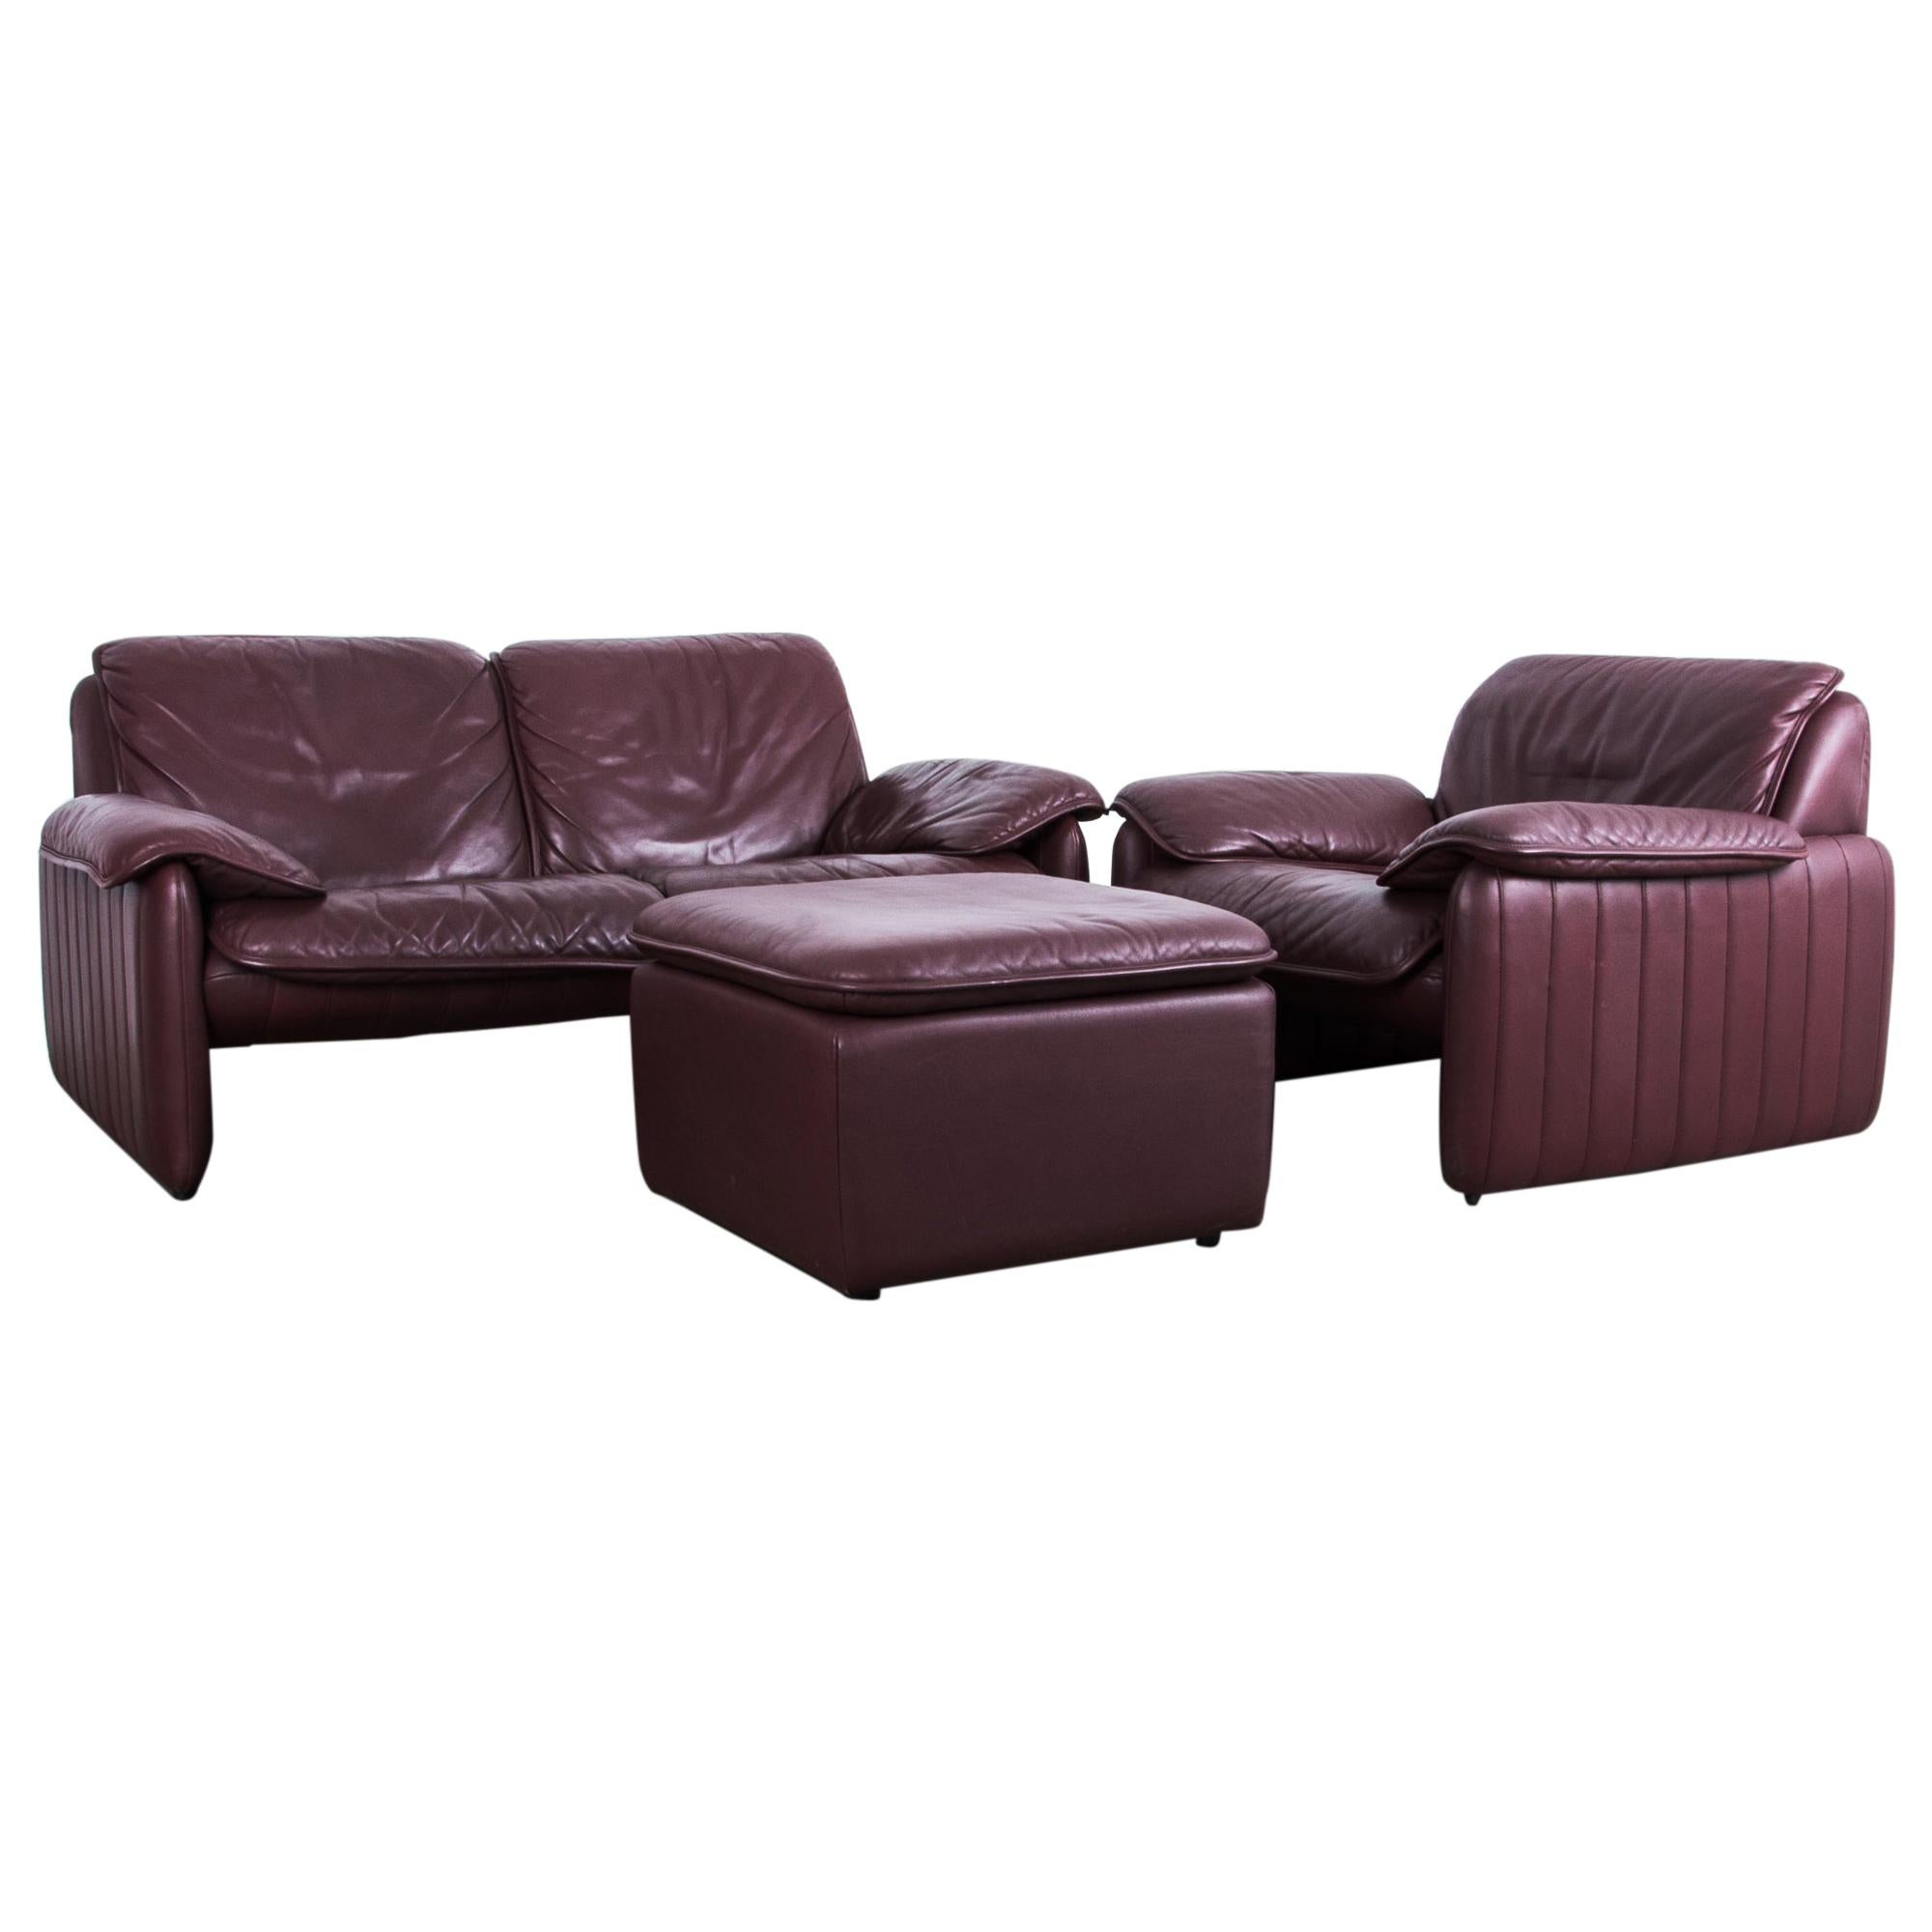 1980s De Sede Maroon Leather Sofa Set